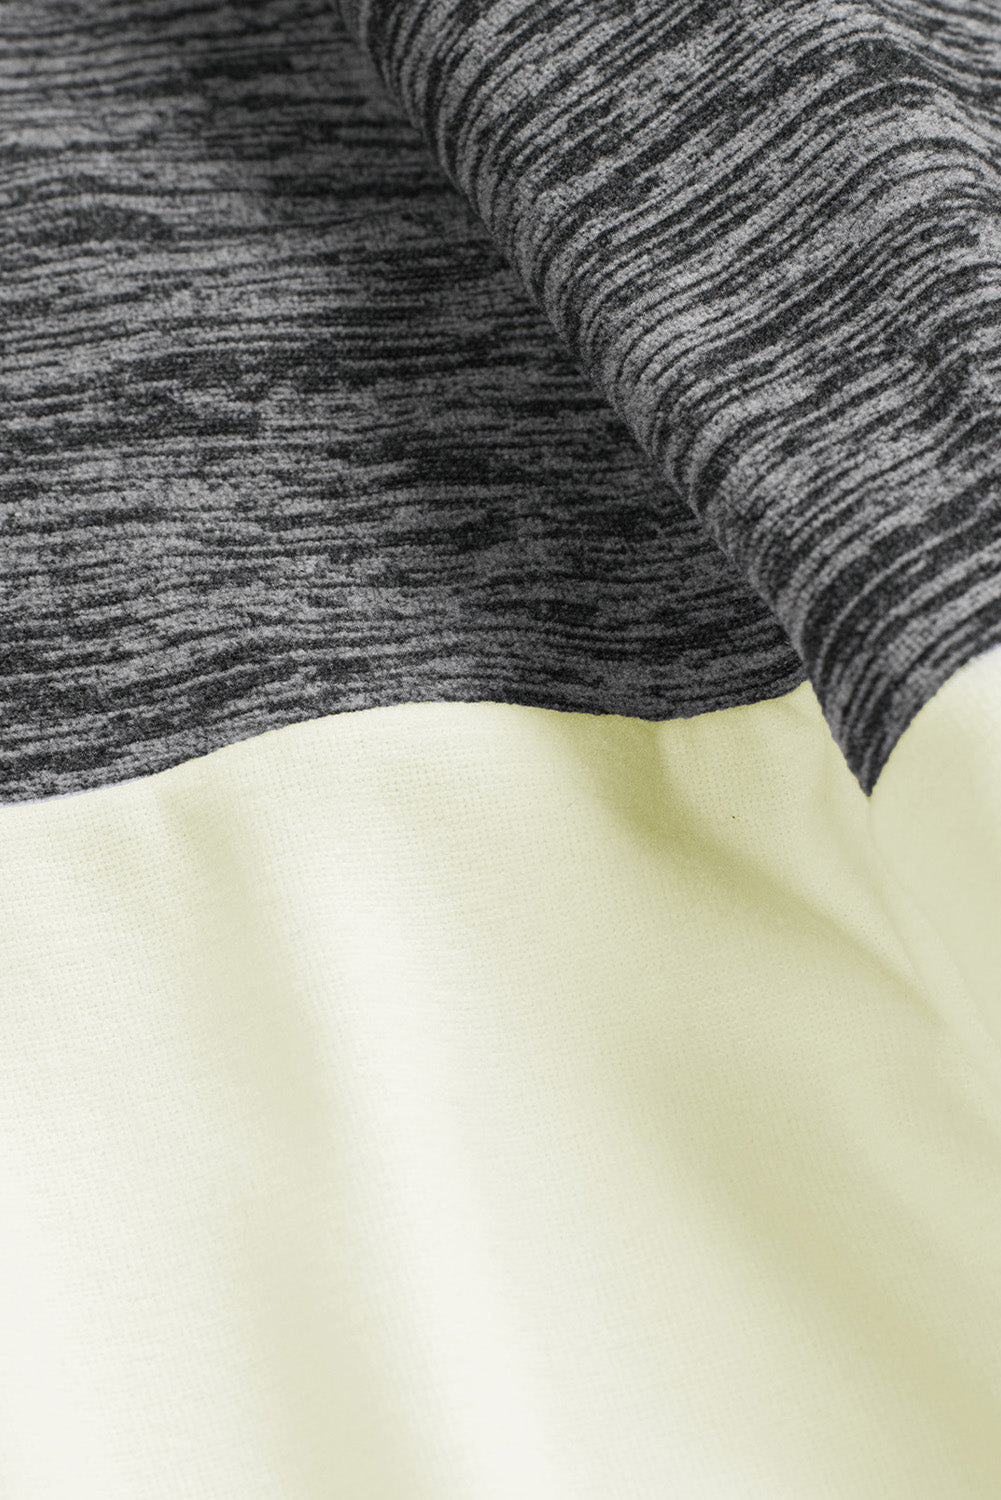 Gray Color Block Raglan Long Sleeve Top